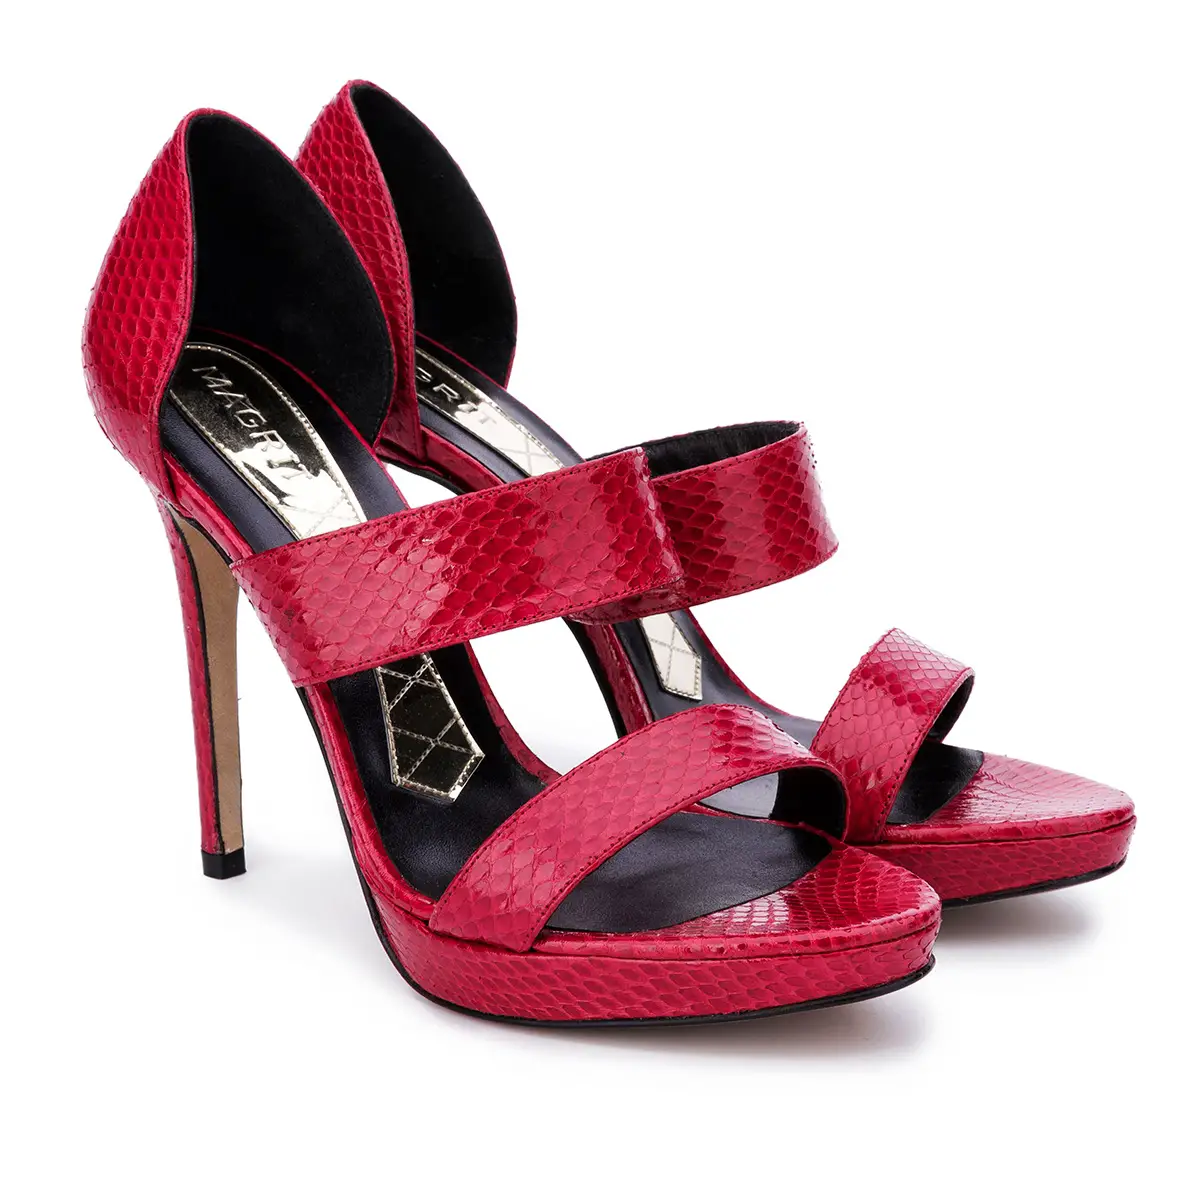 Queen Letizia Magrit Silvia red slide sandals